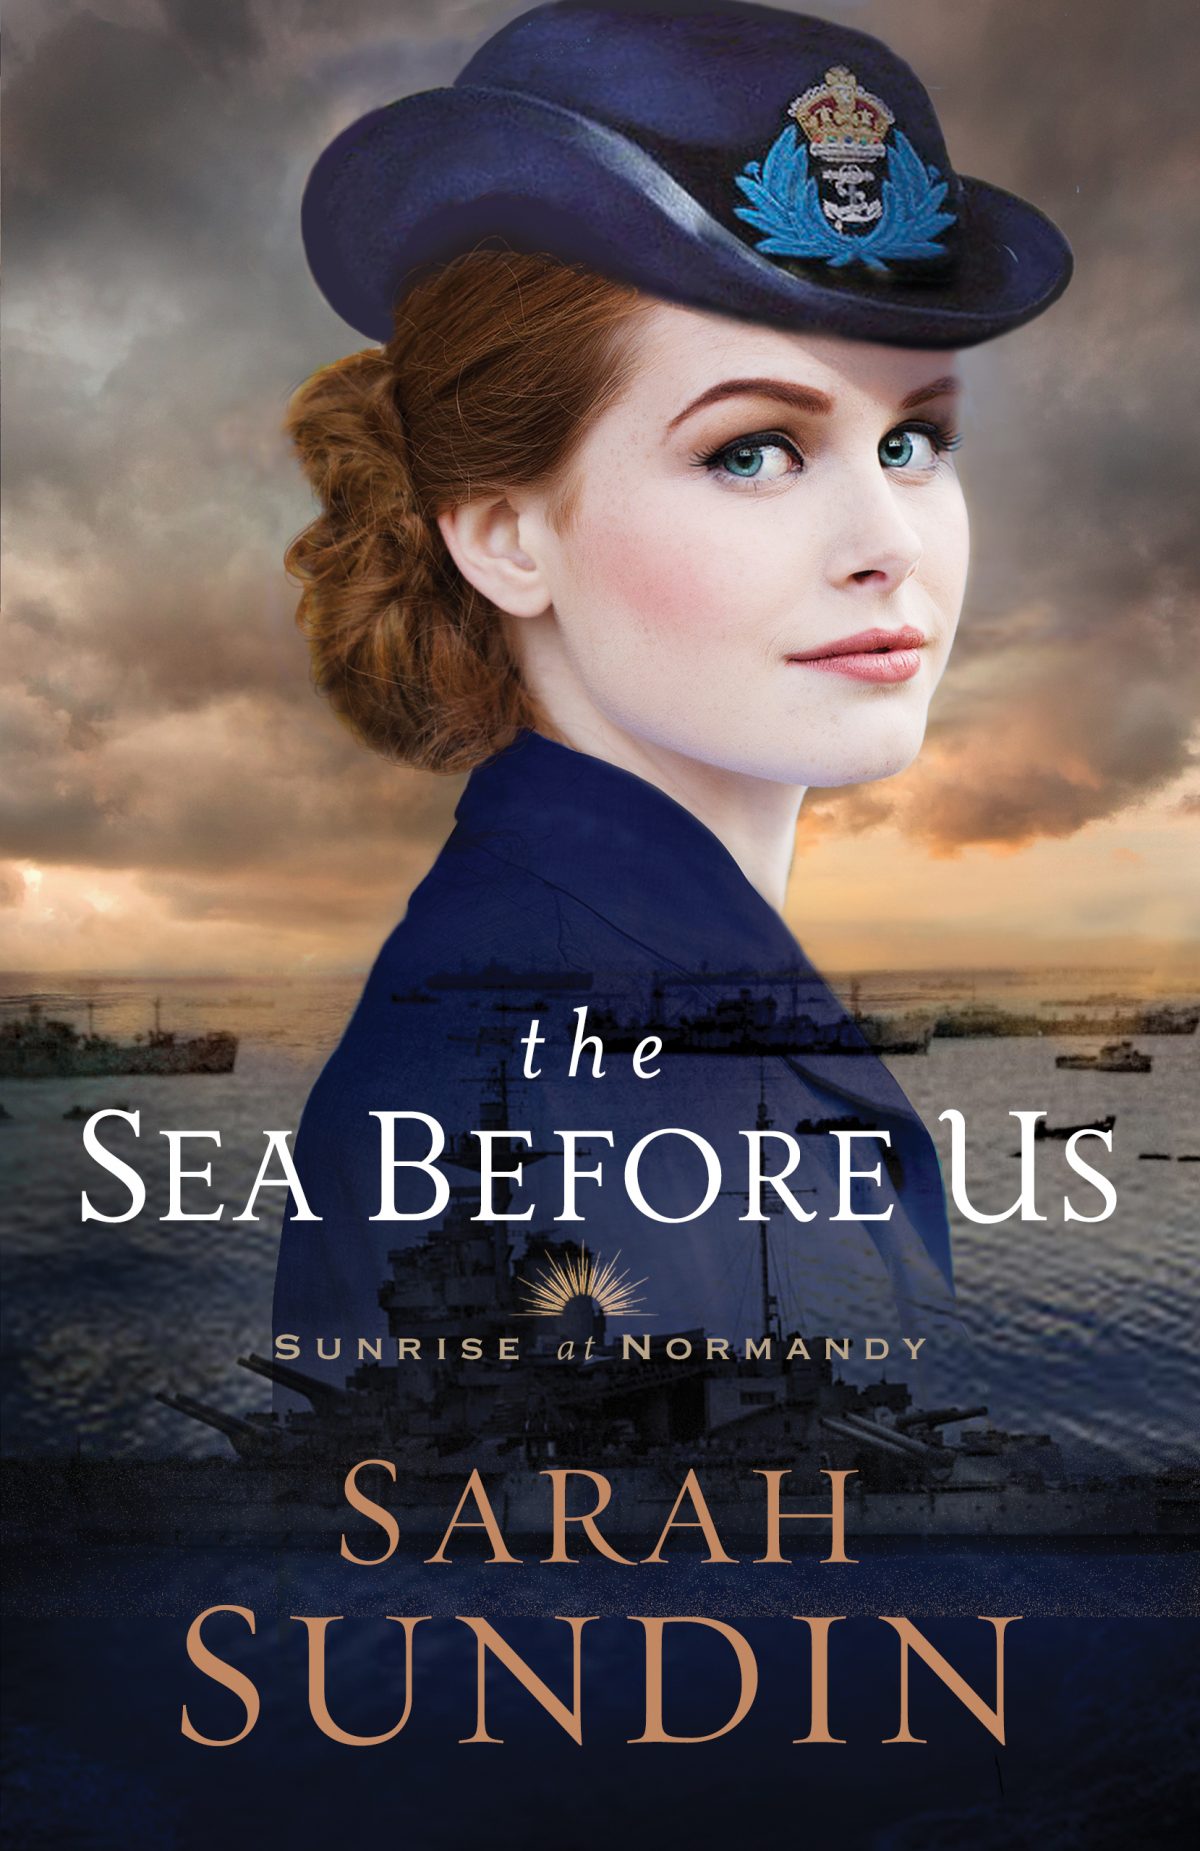 The Sea Before Us by Sarah Sundin